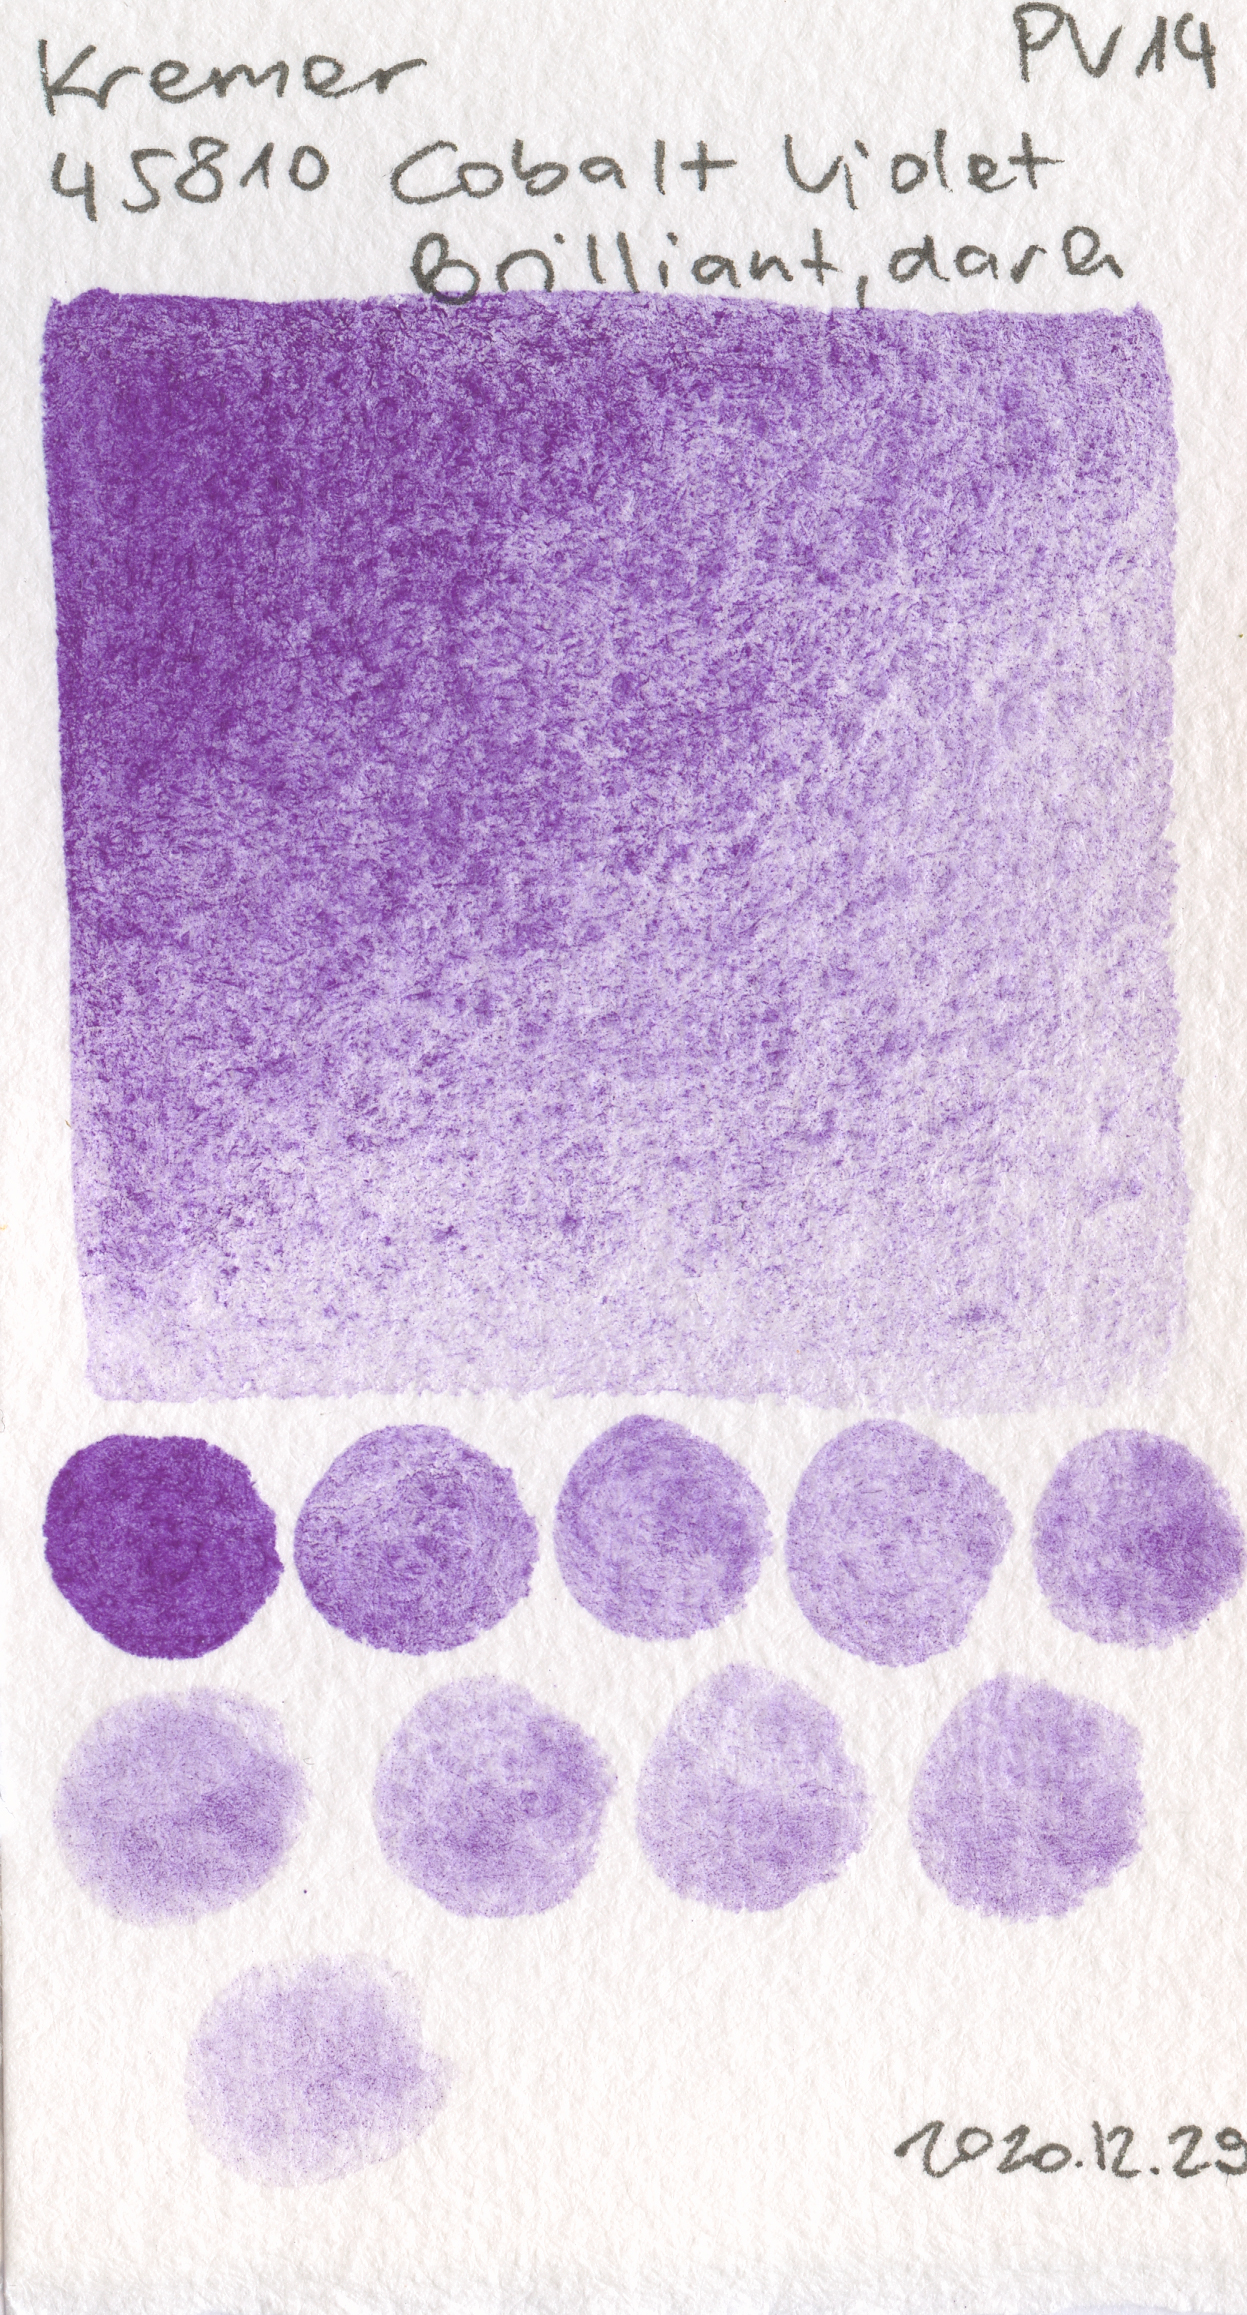 Kremer Pigmente [Dry] Pigments 45810 Cobalt Violet Brilliant, dark PV14 watercolor swatch